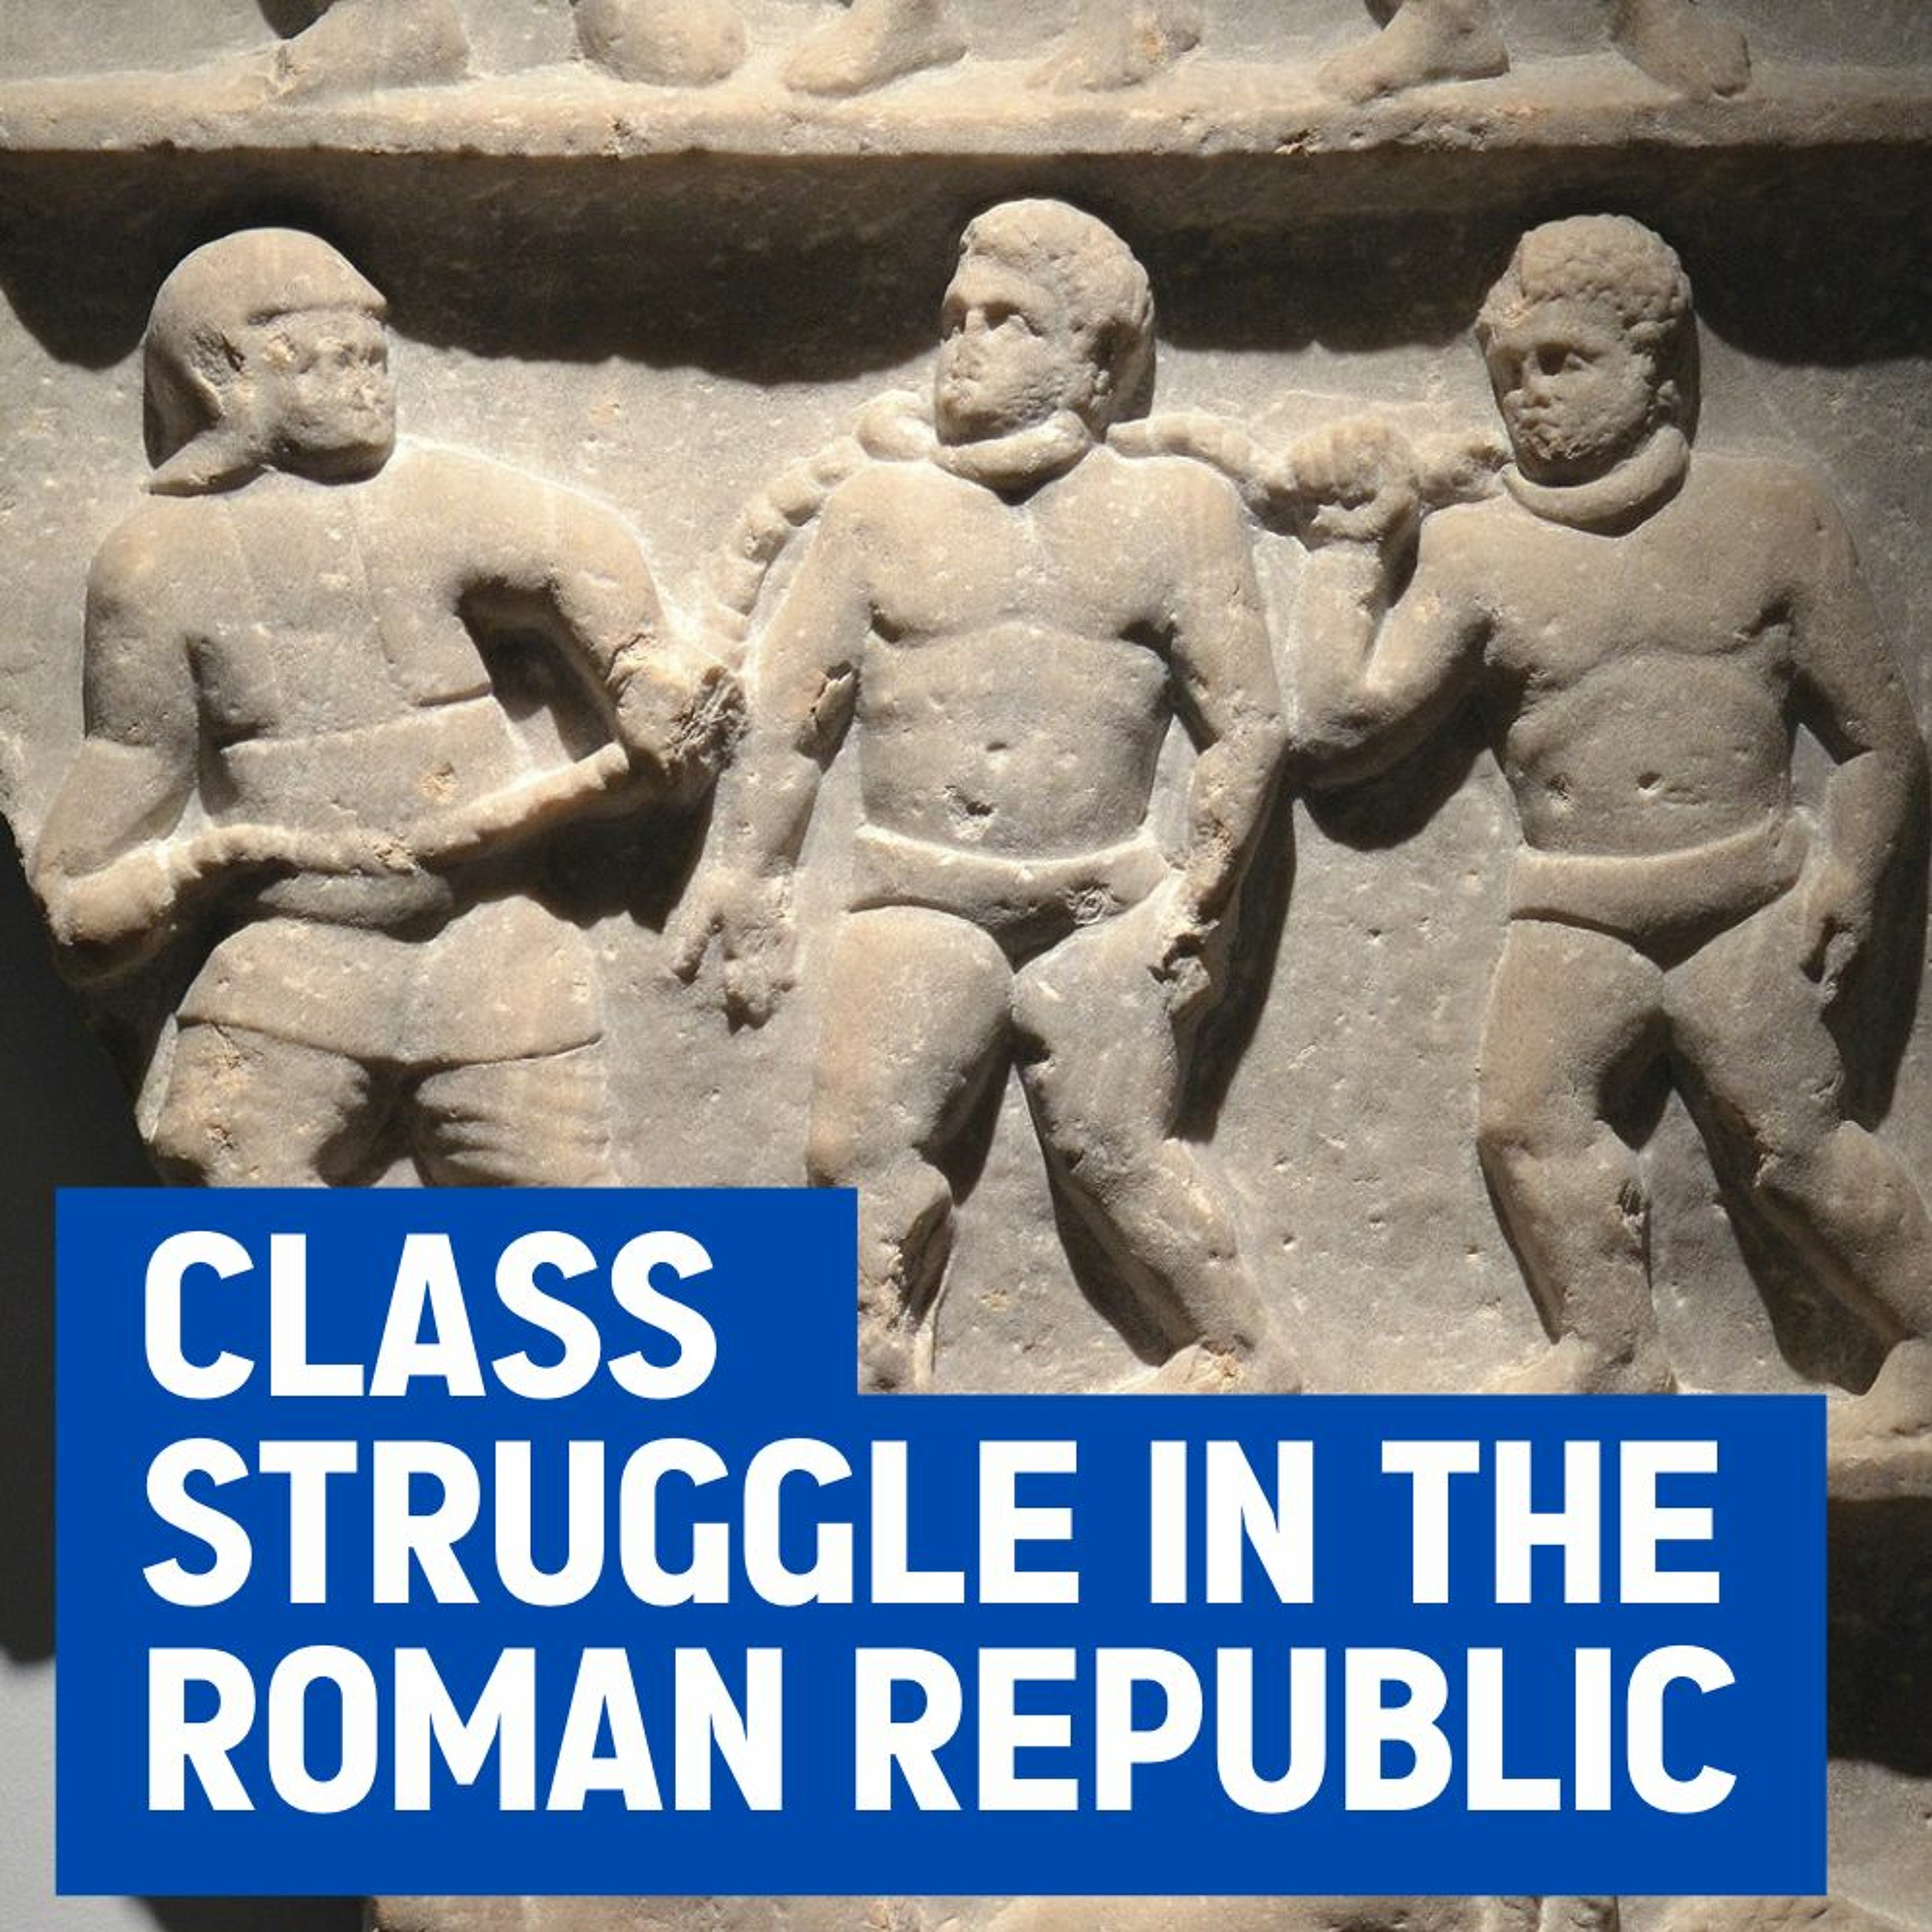 Class struggle in the Roman republic